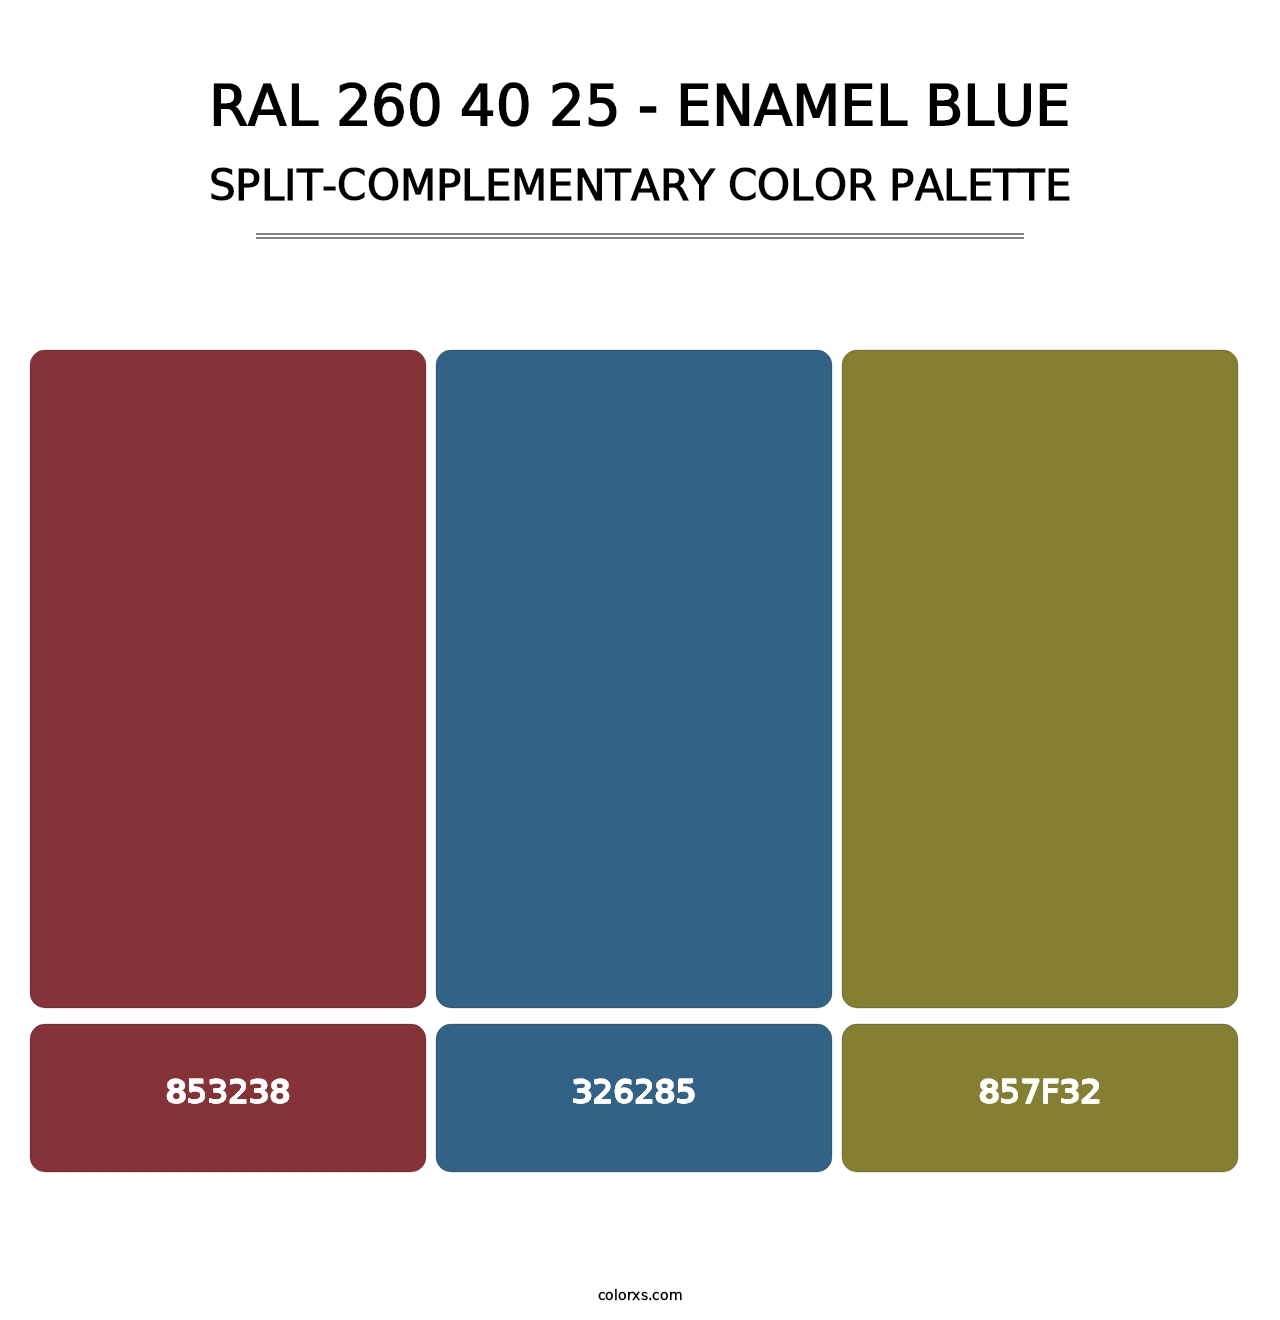 RAL 260 40 25 - Enamel Blue - Split-Complementary Color Palette